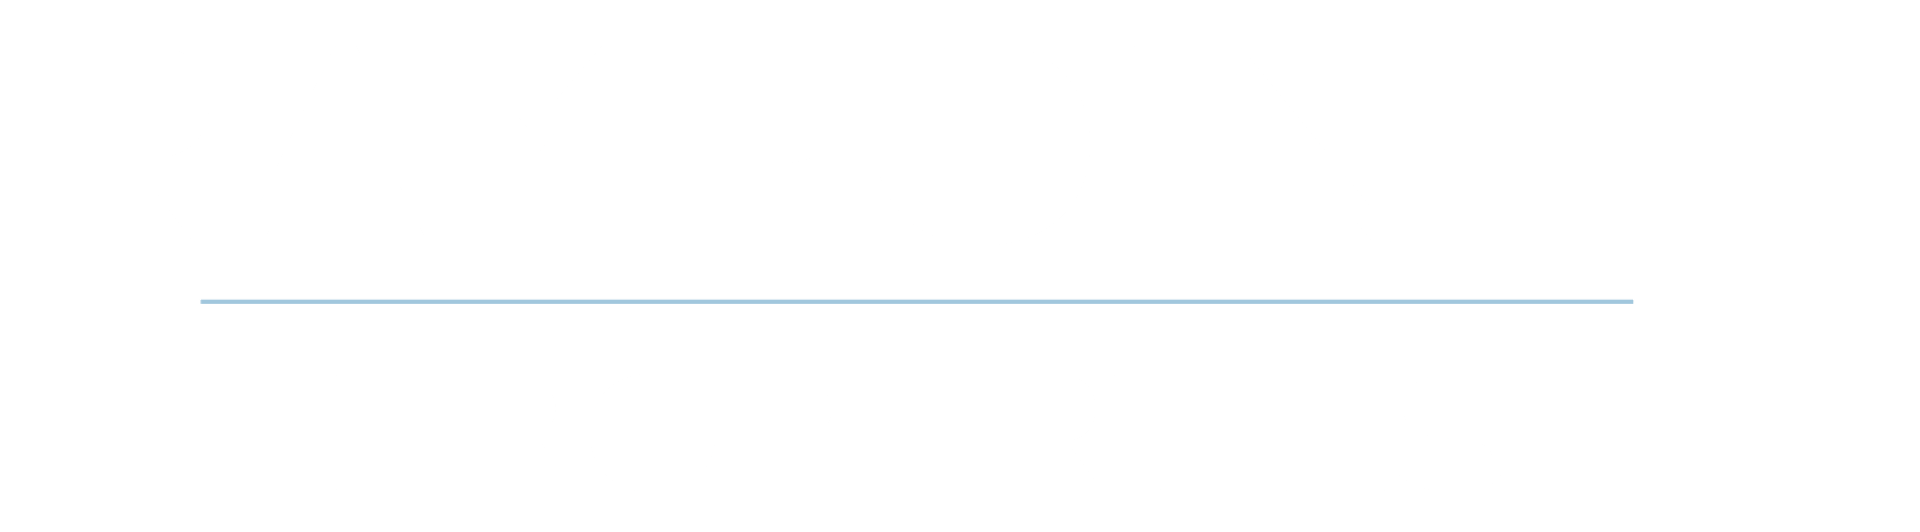 raypointe properties logo